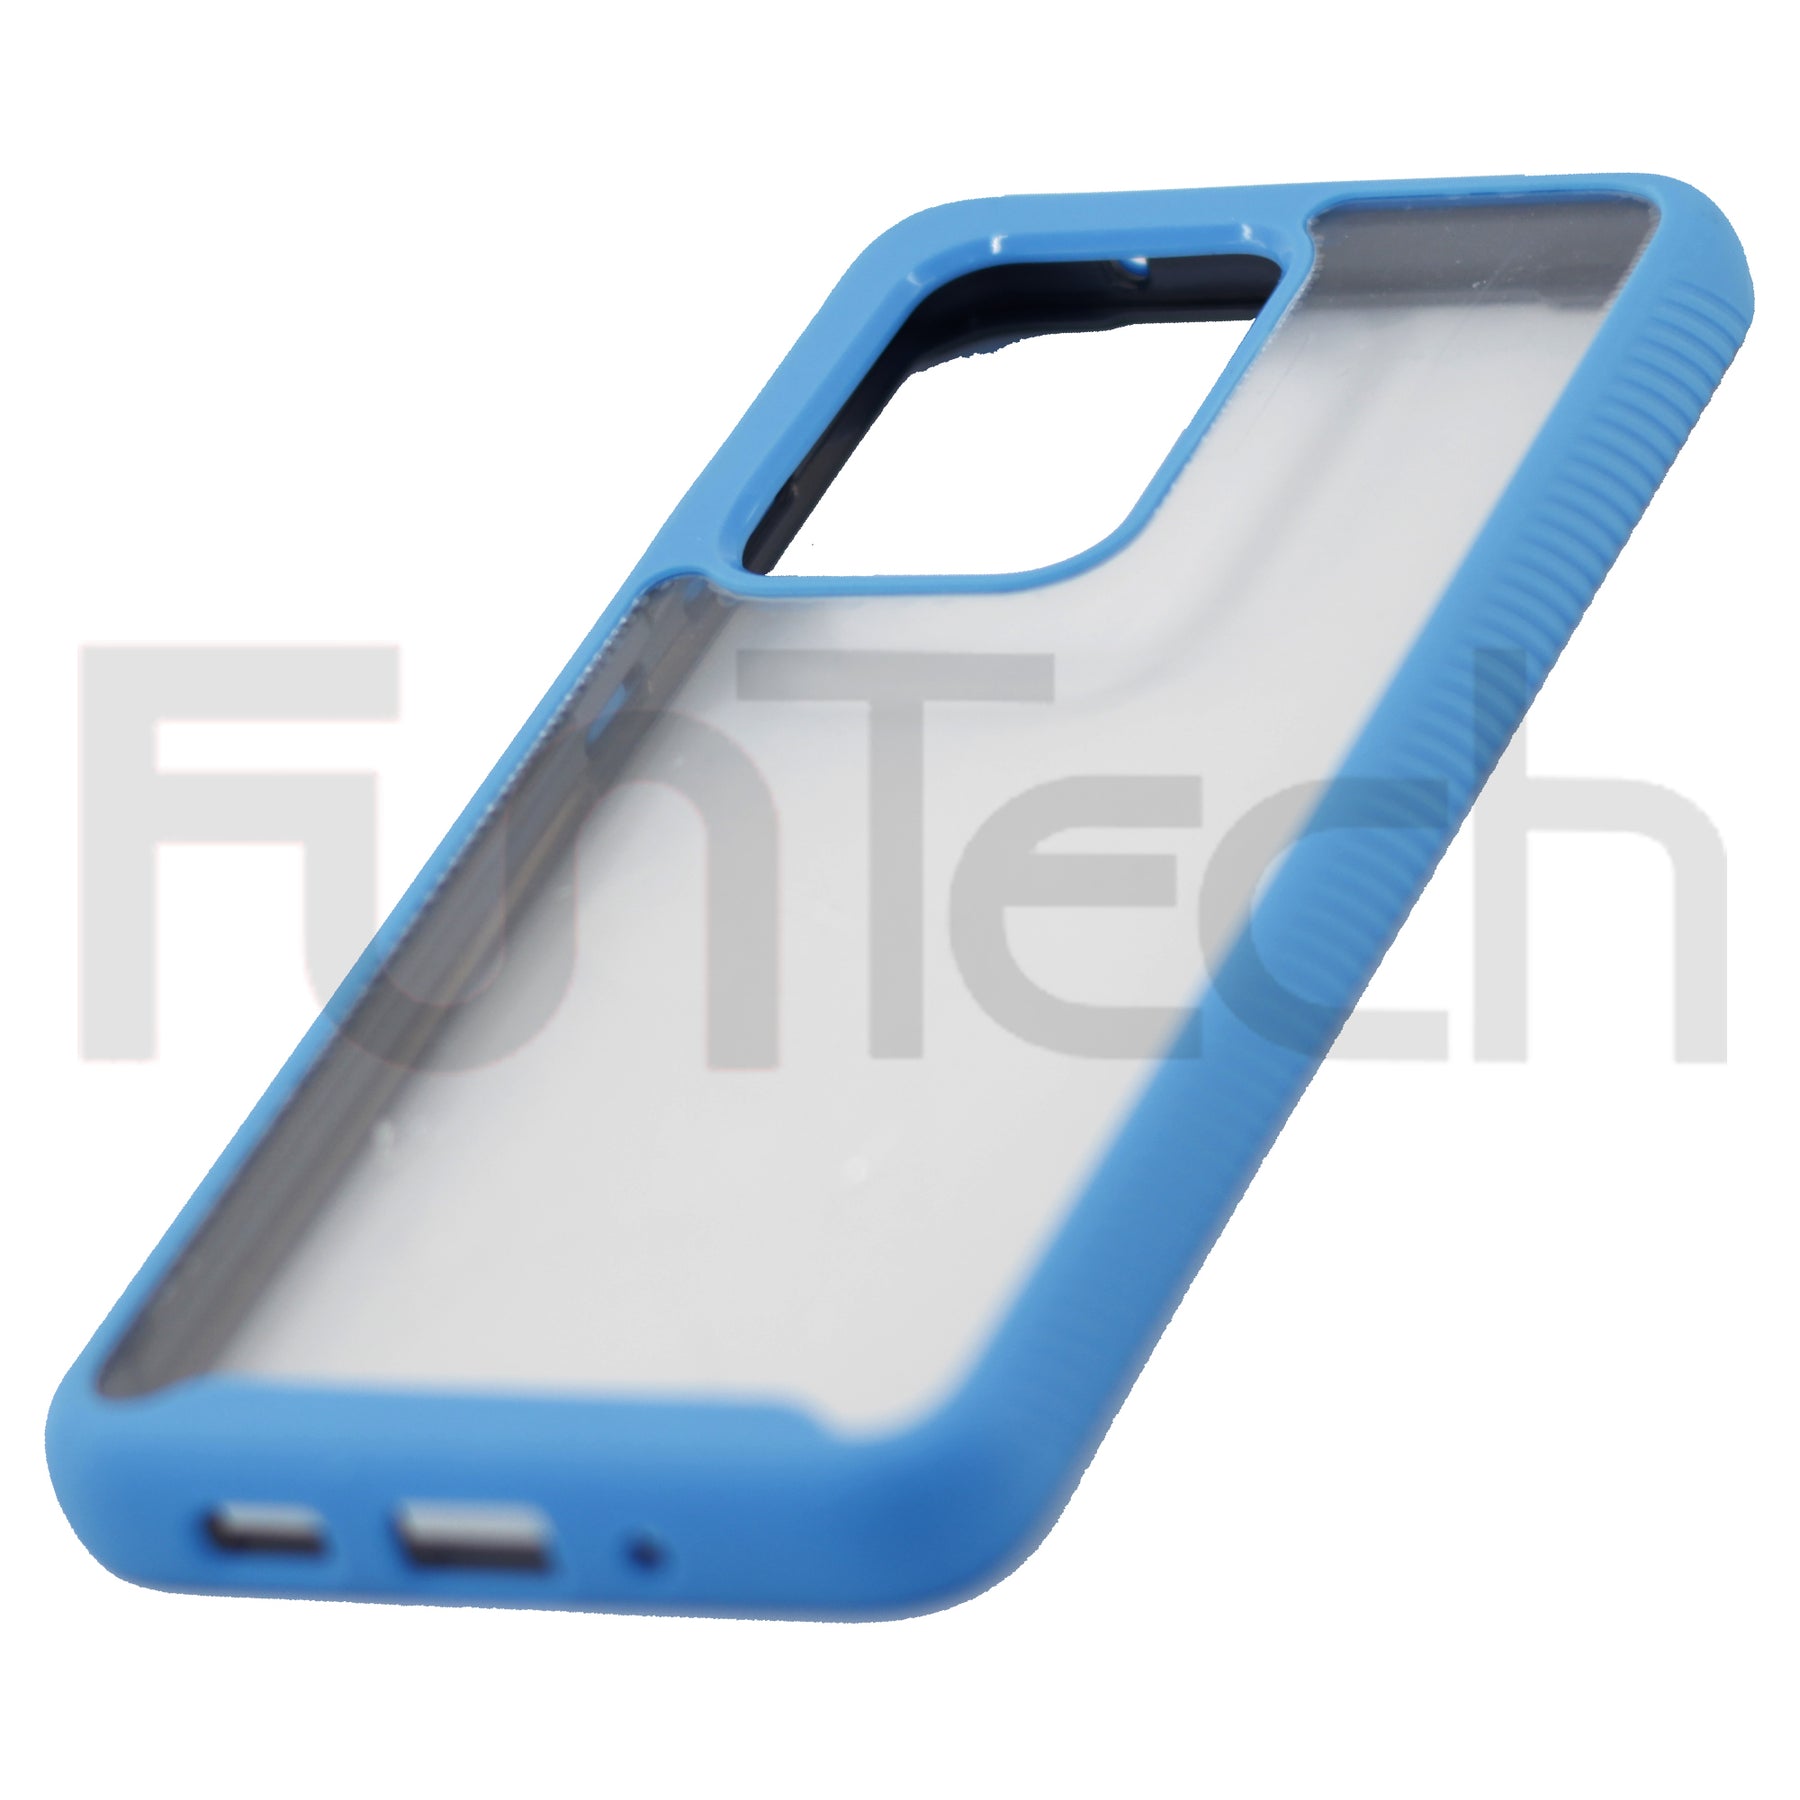 Samsung S20 Ultra Shockproof blue clear transparent phone case